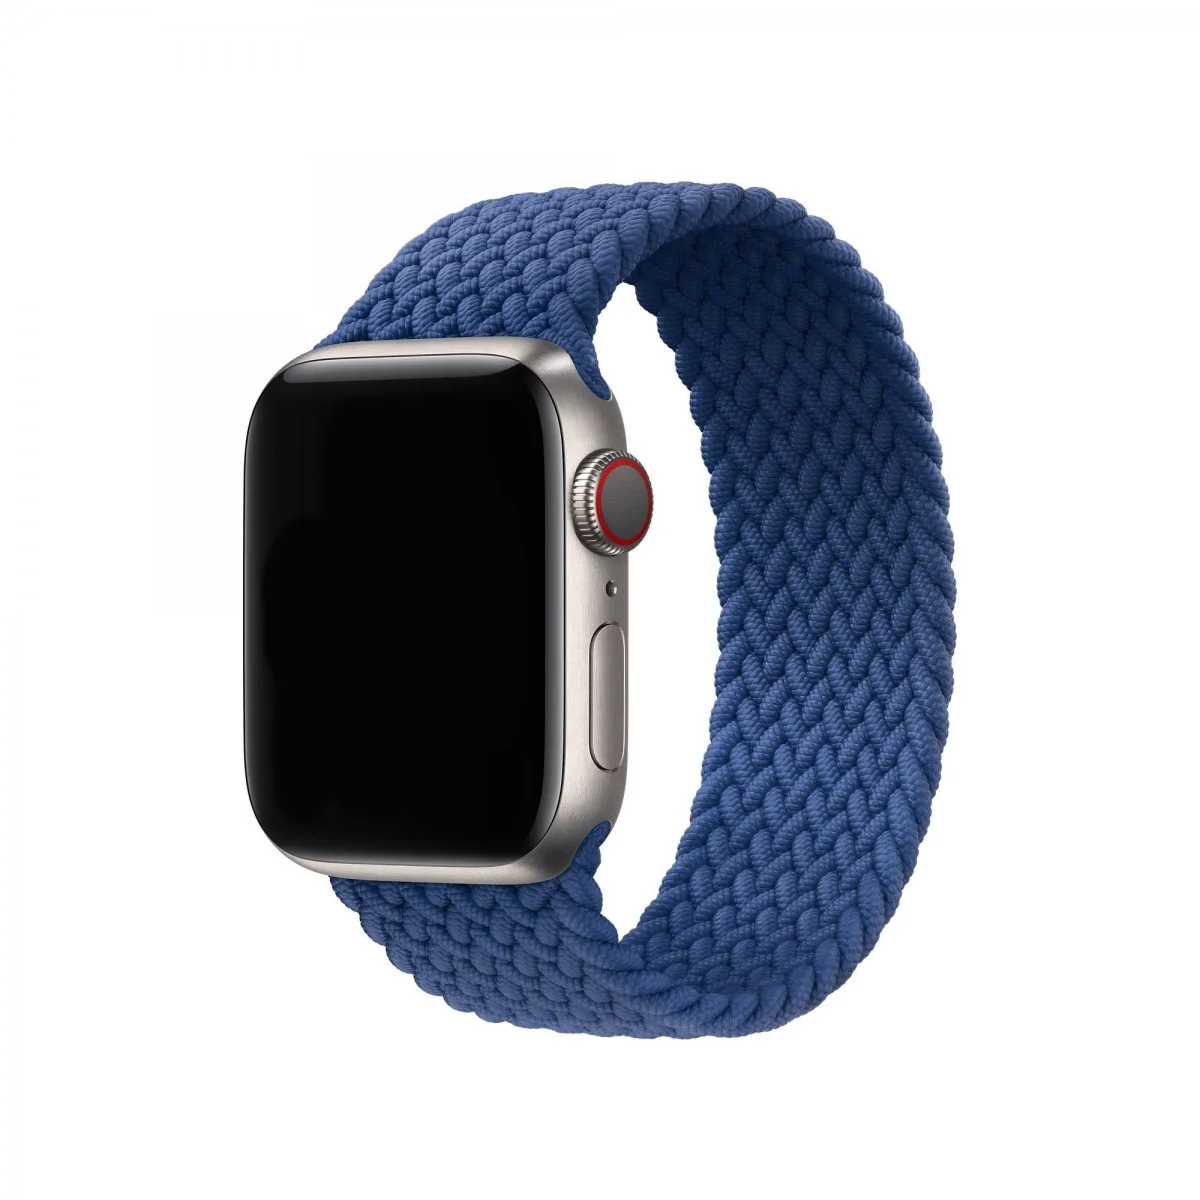 Řemínek iMore Braided Solo Loop Apple Watch Series 1/2/3 38mm - atlanticky modrý (L)